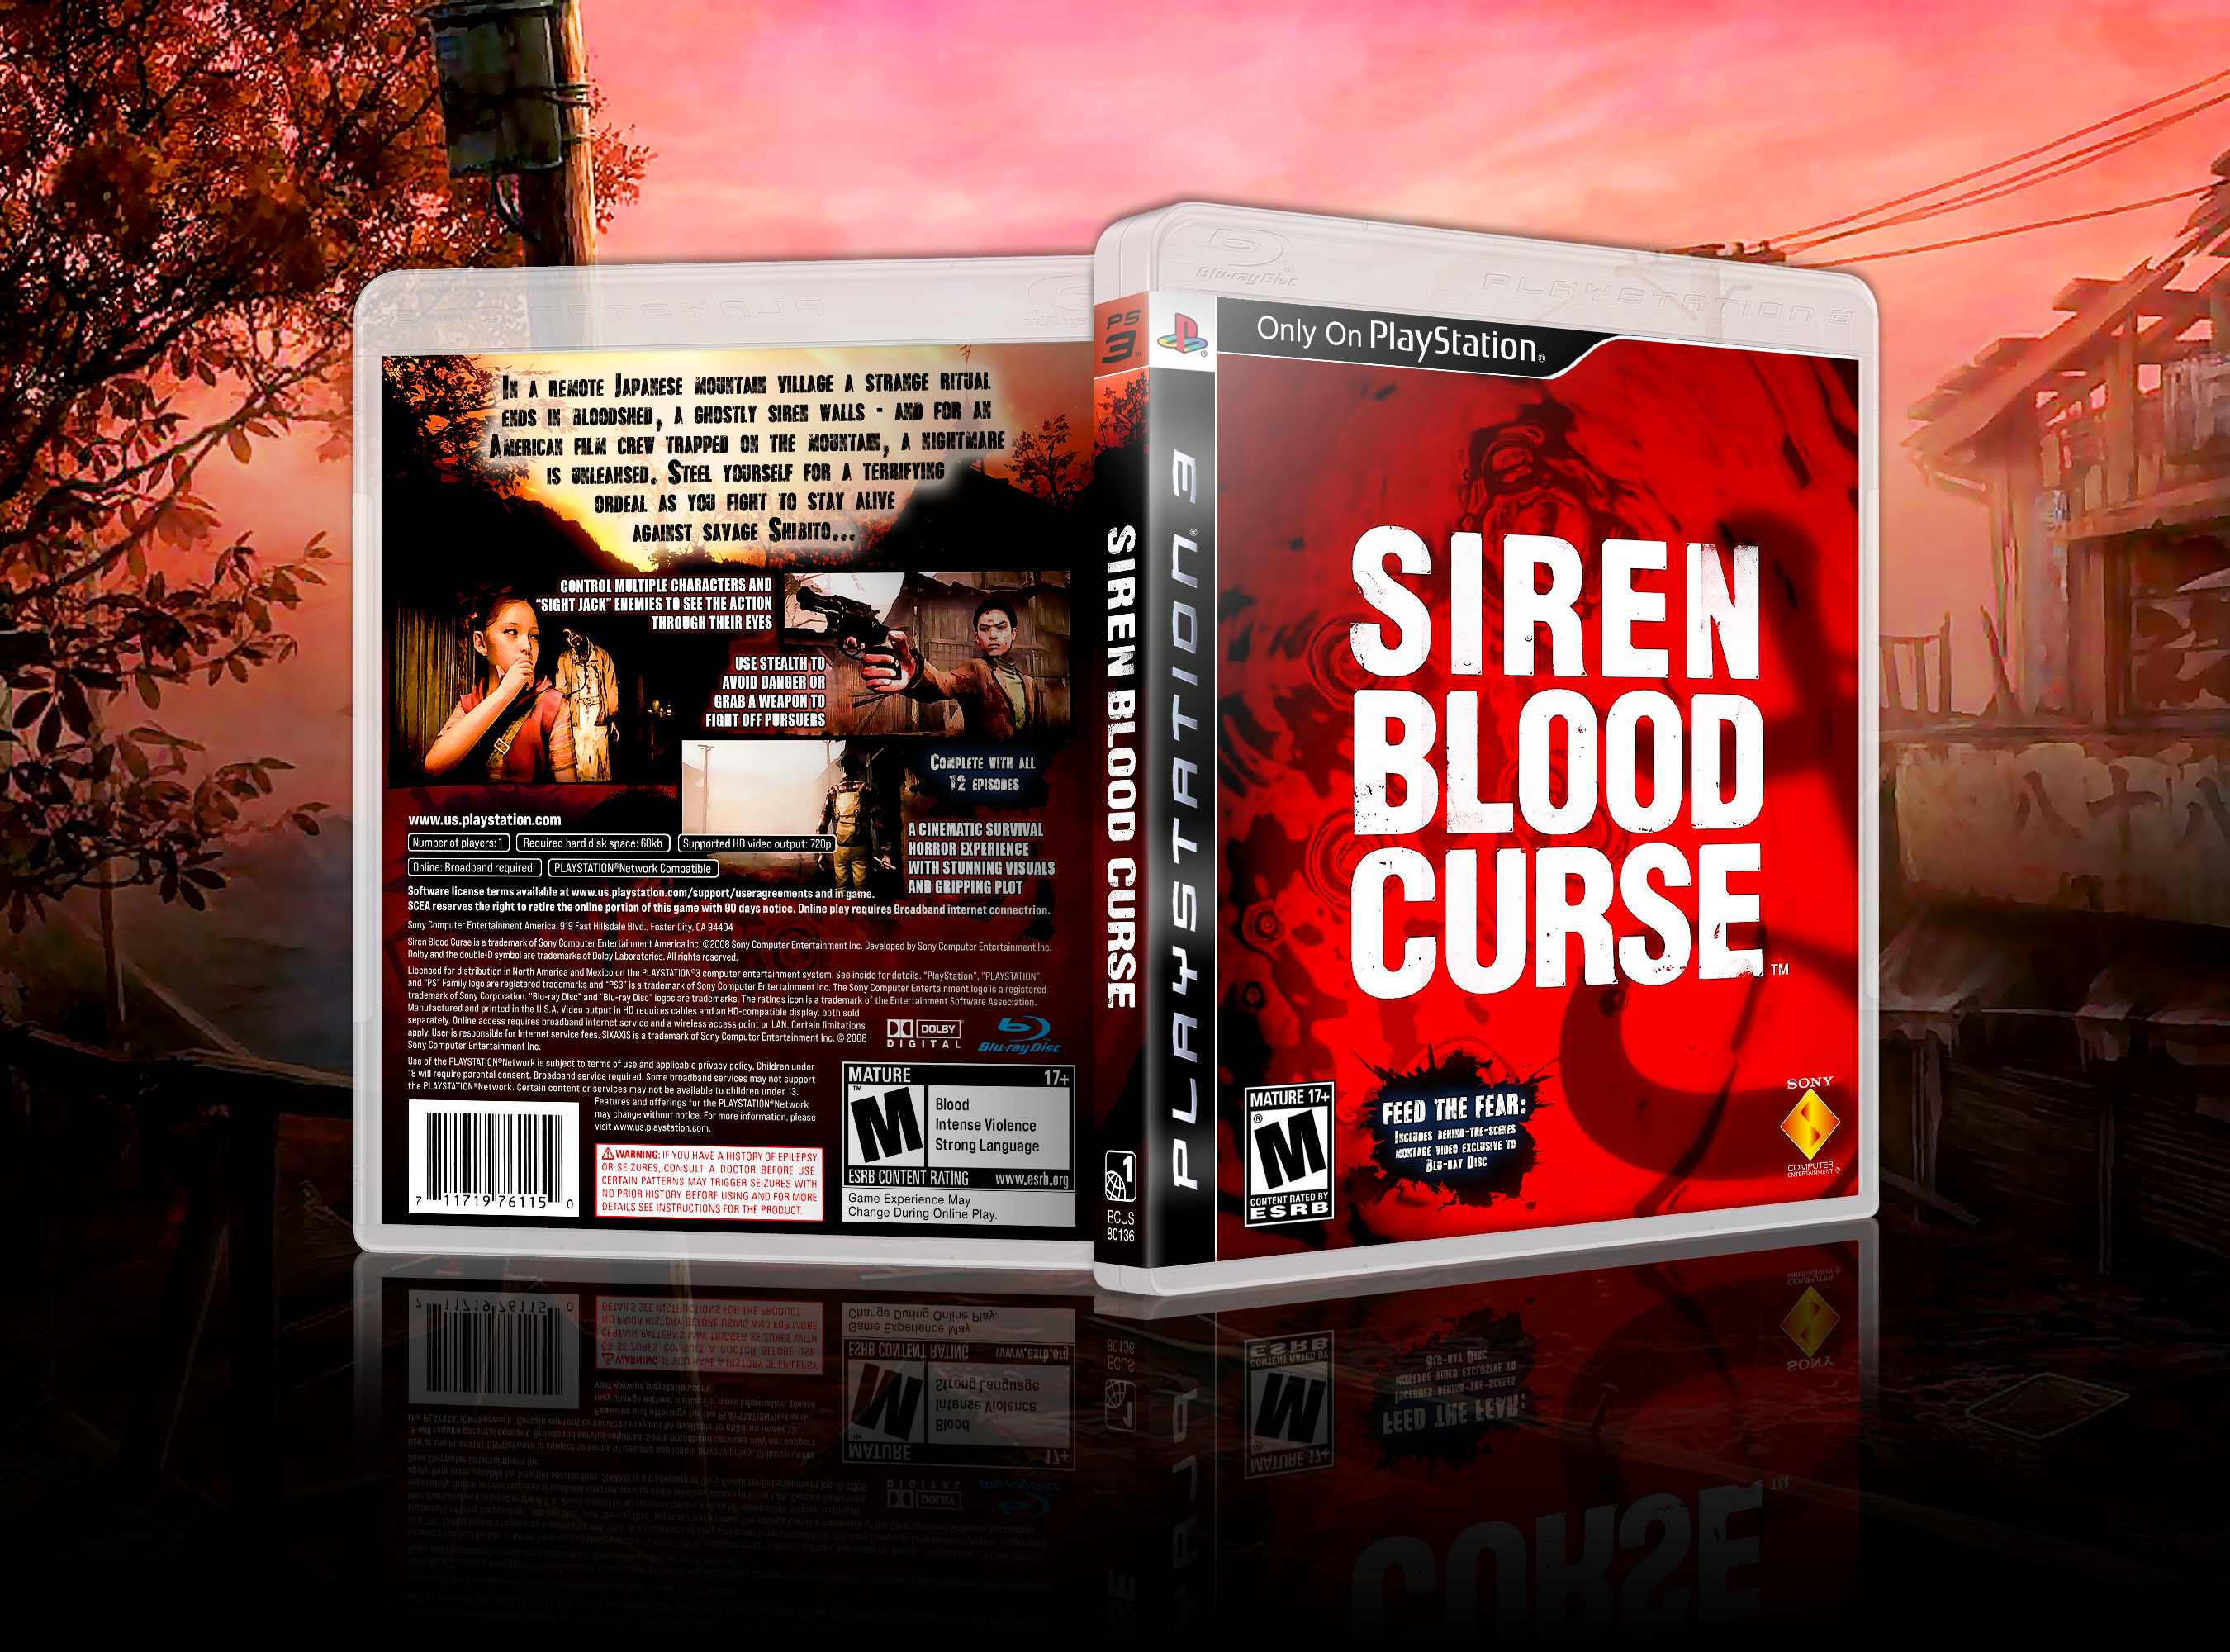 Siren: Blood Curse box cover